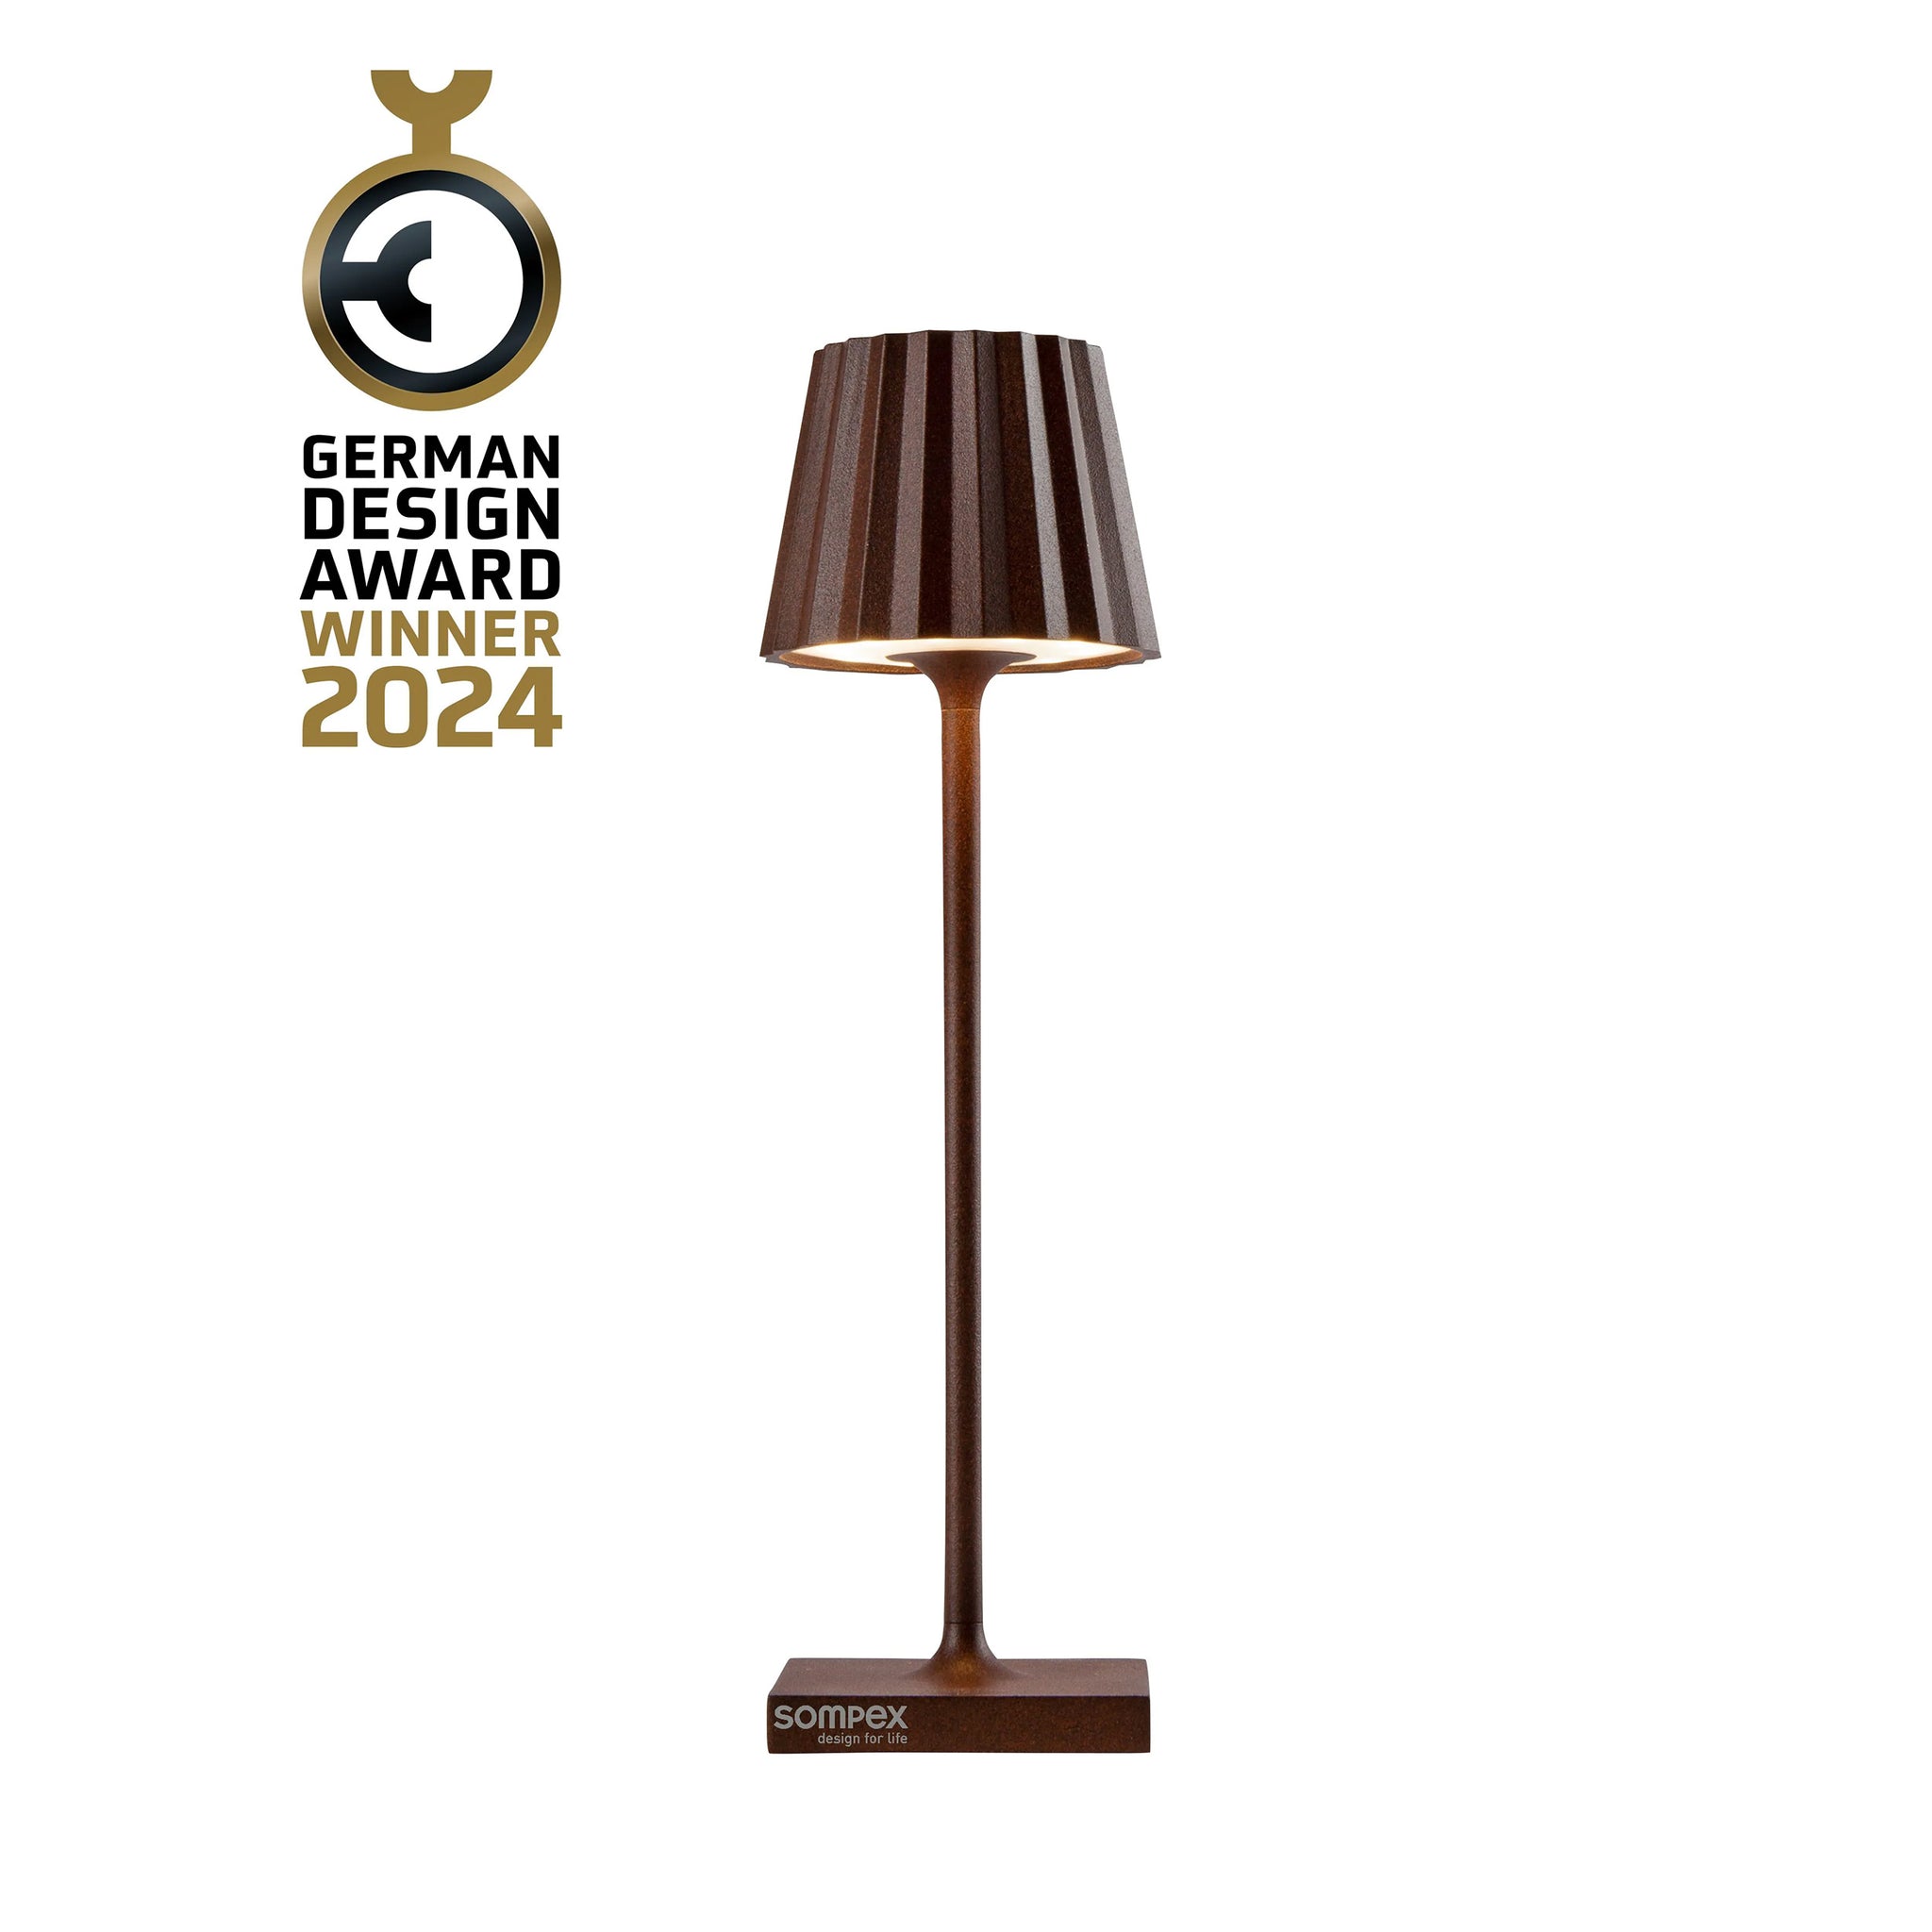 Sompex Troll Nano Roestbruin│Oplaadbare Tafellamp│Buitenverlichting│art. 78573│logo German Design Award Winner 2024